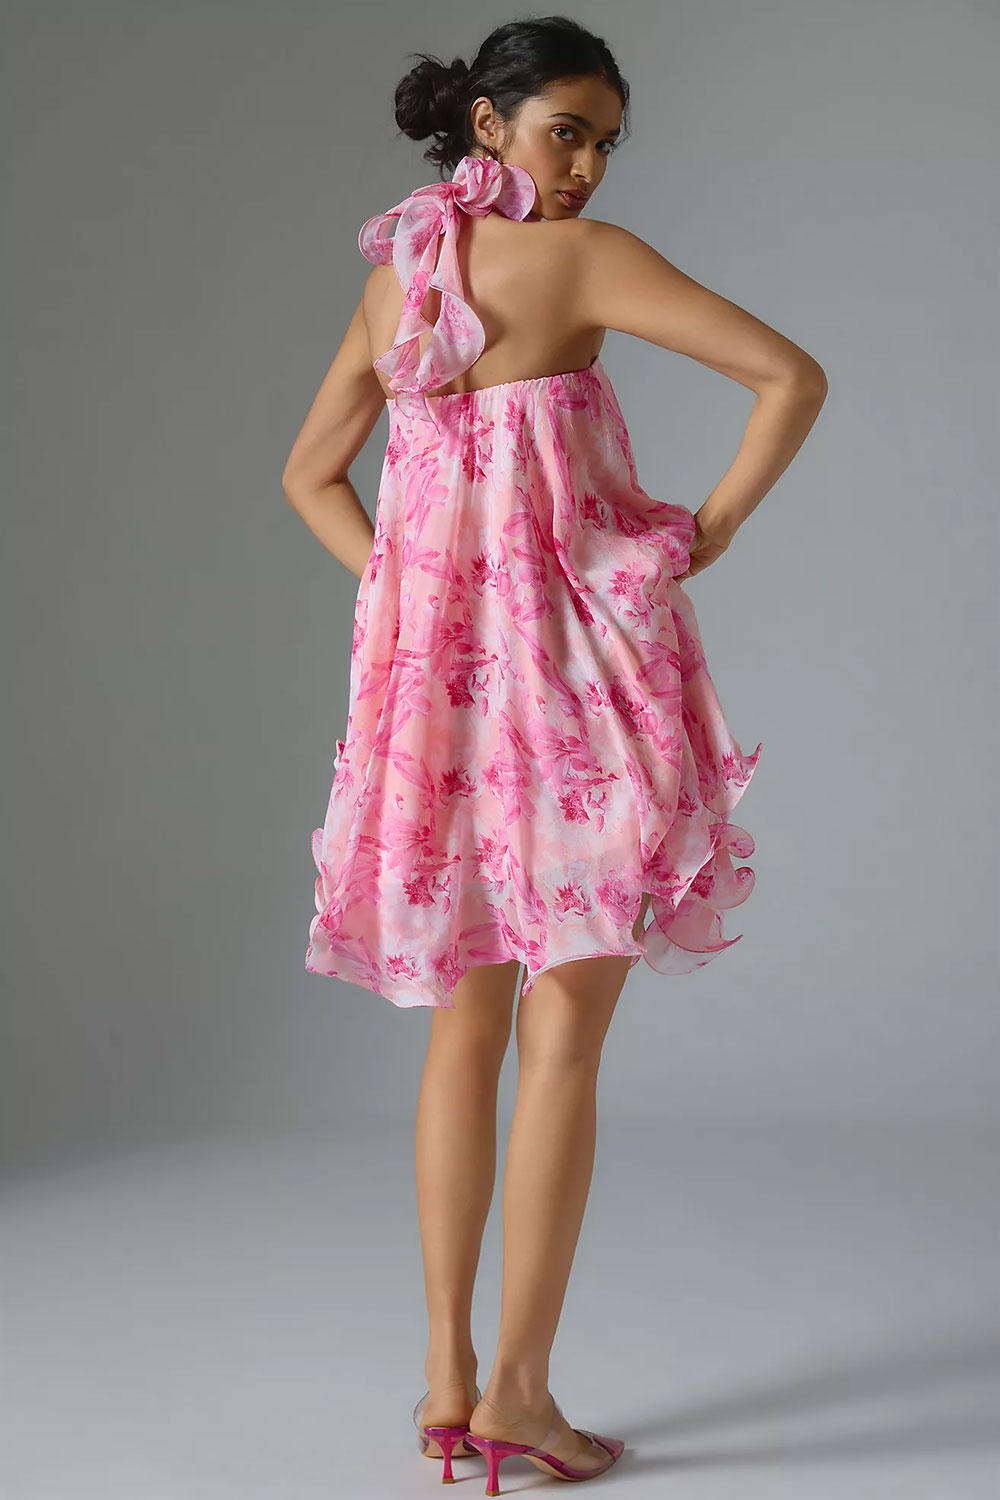 Pink floral mini dress for summer wedding